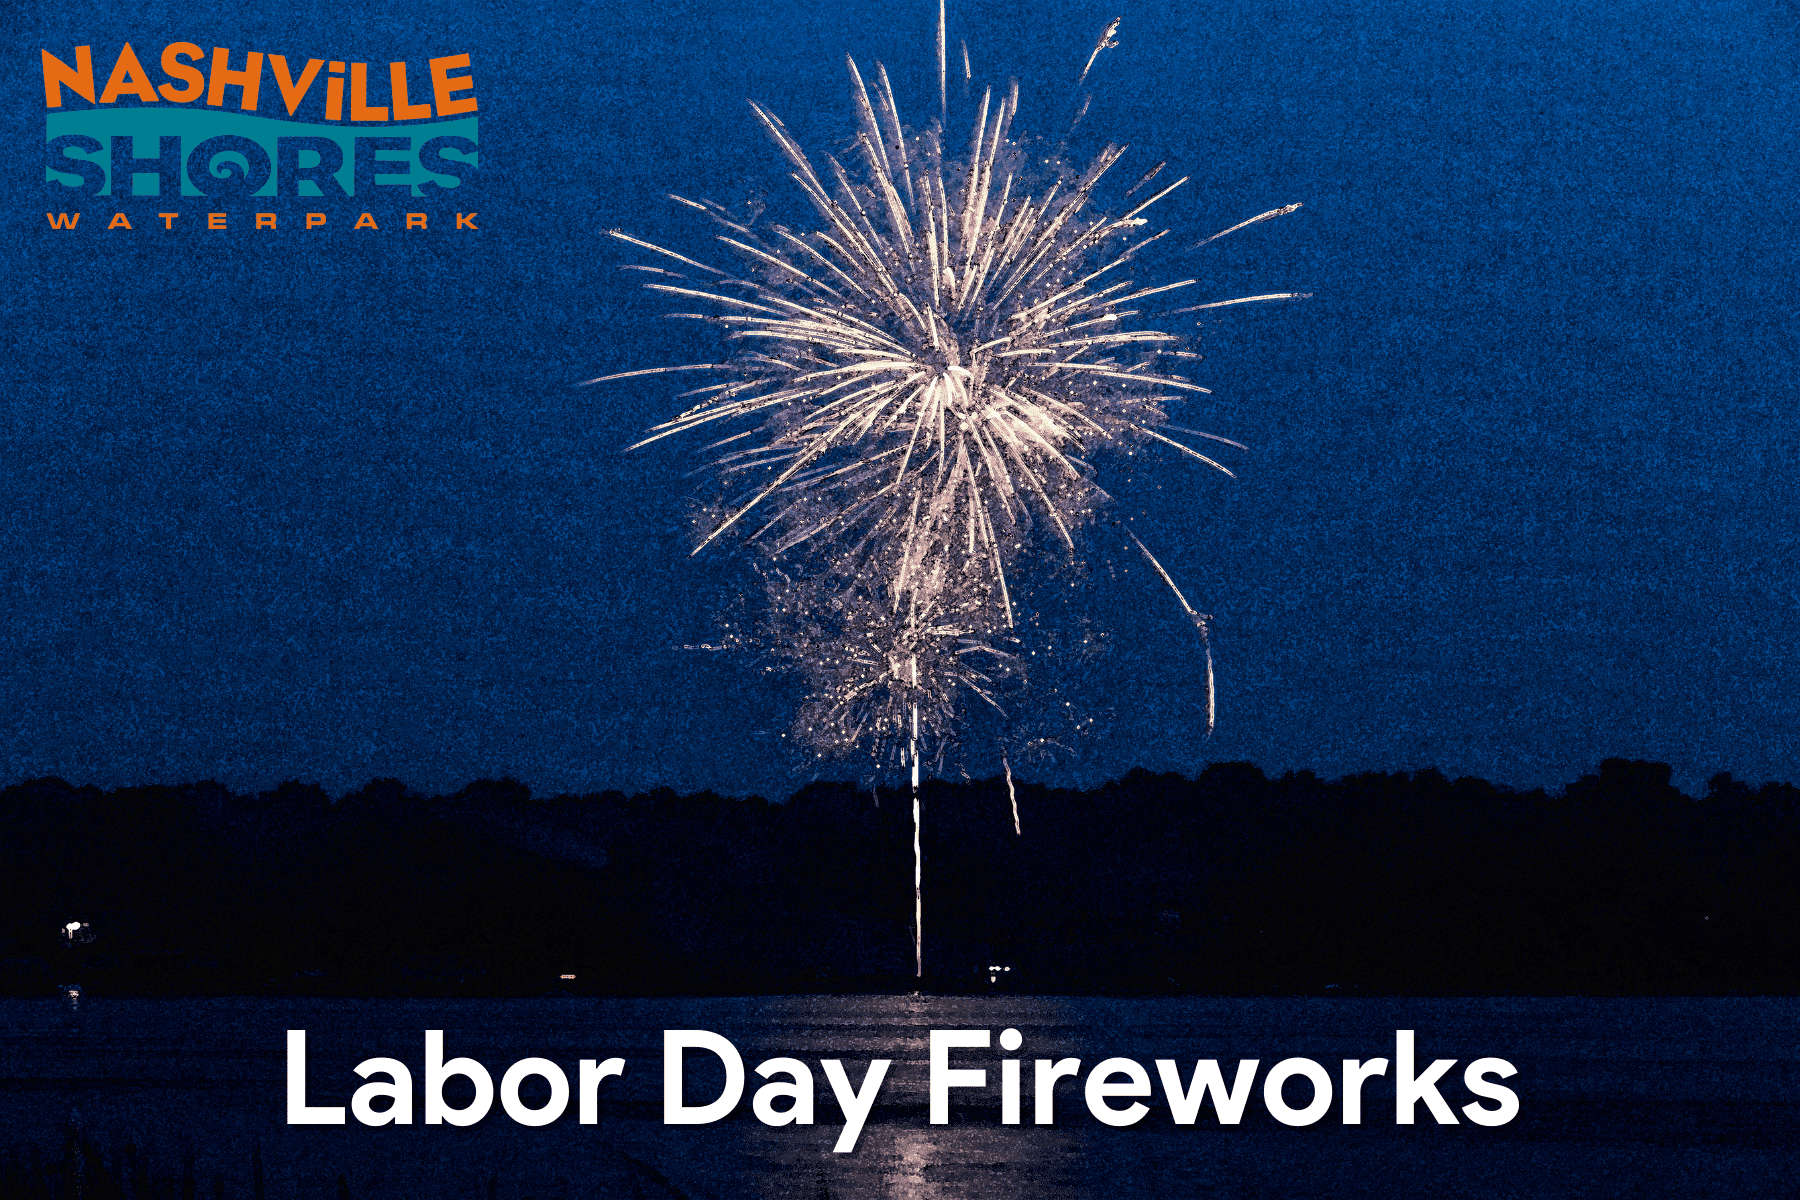 Nashville Shores Labor Day Fireworks in Nashville TN.